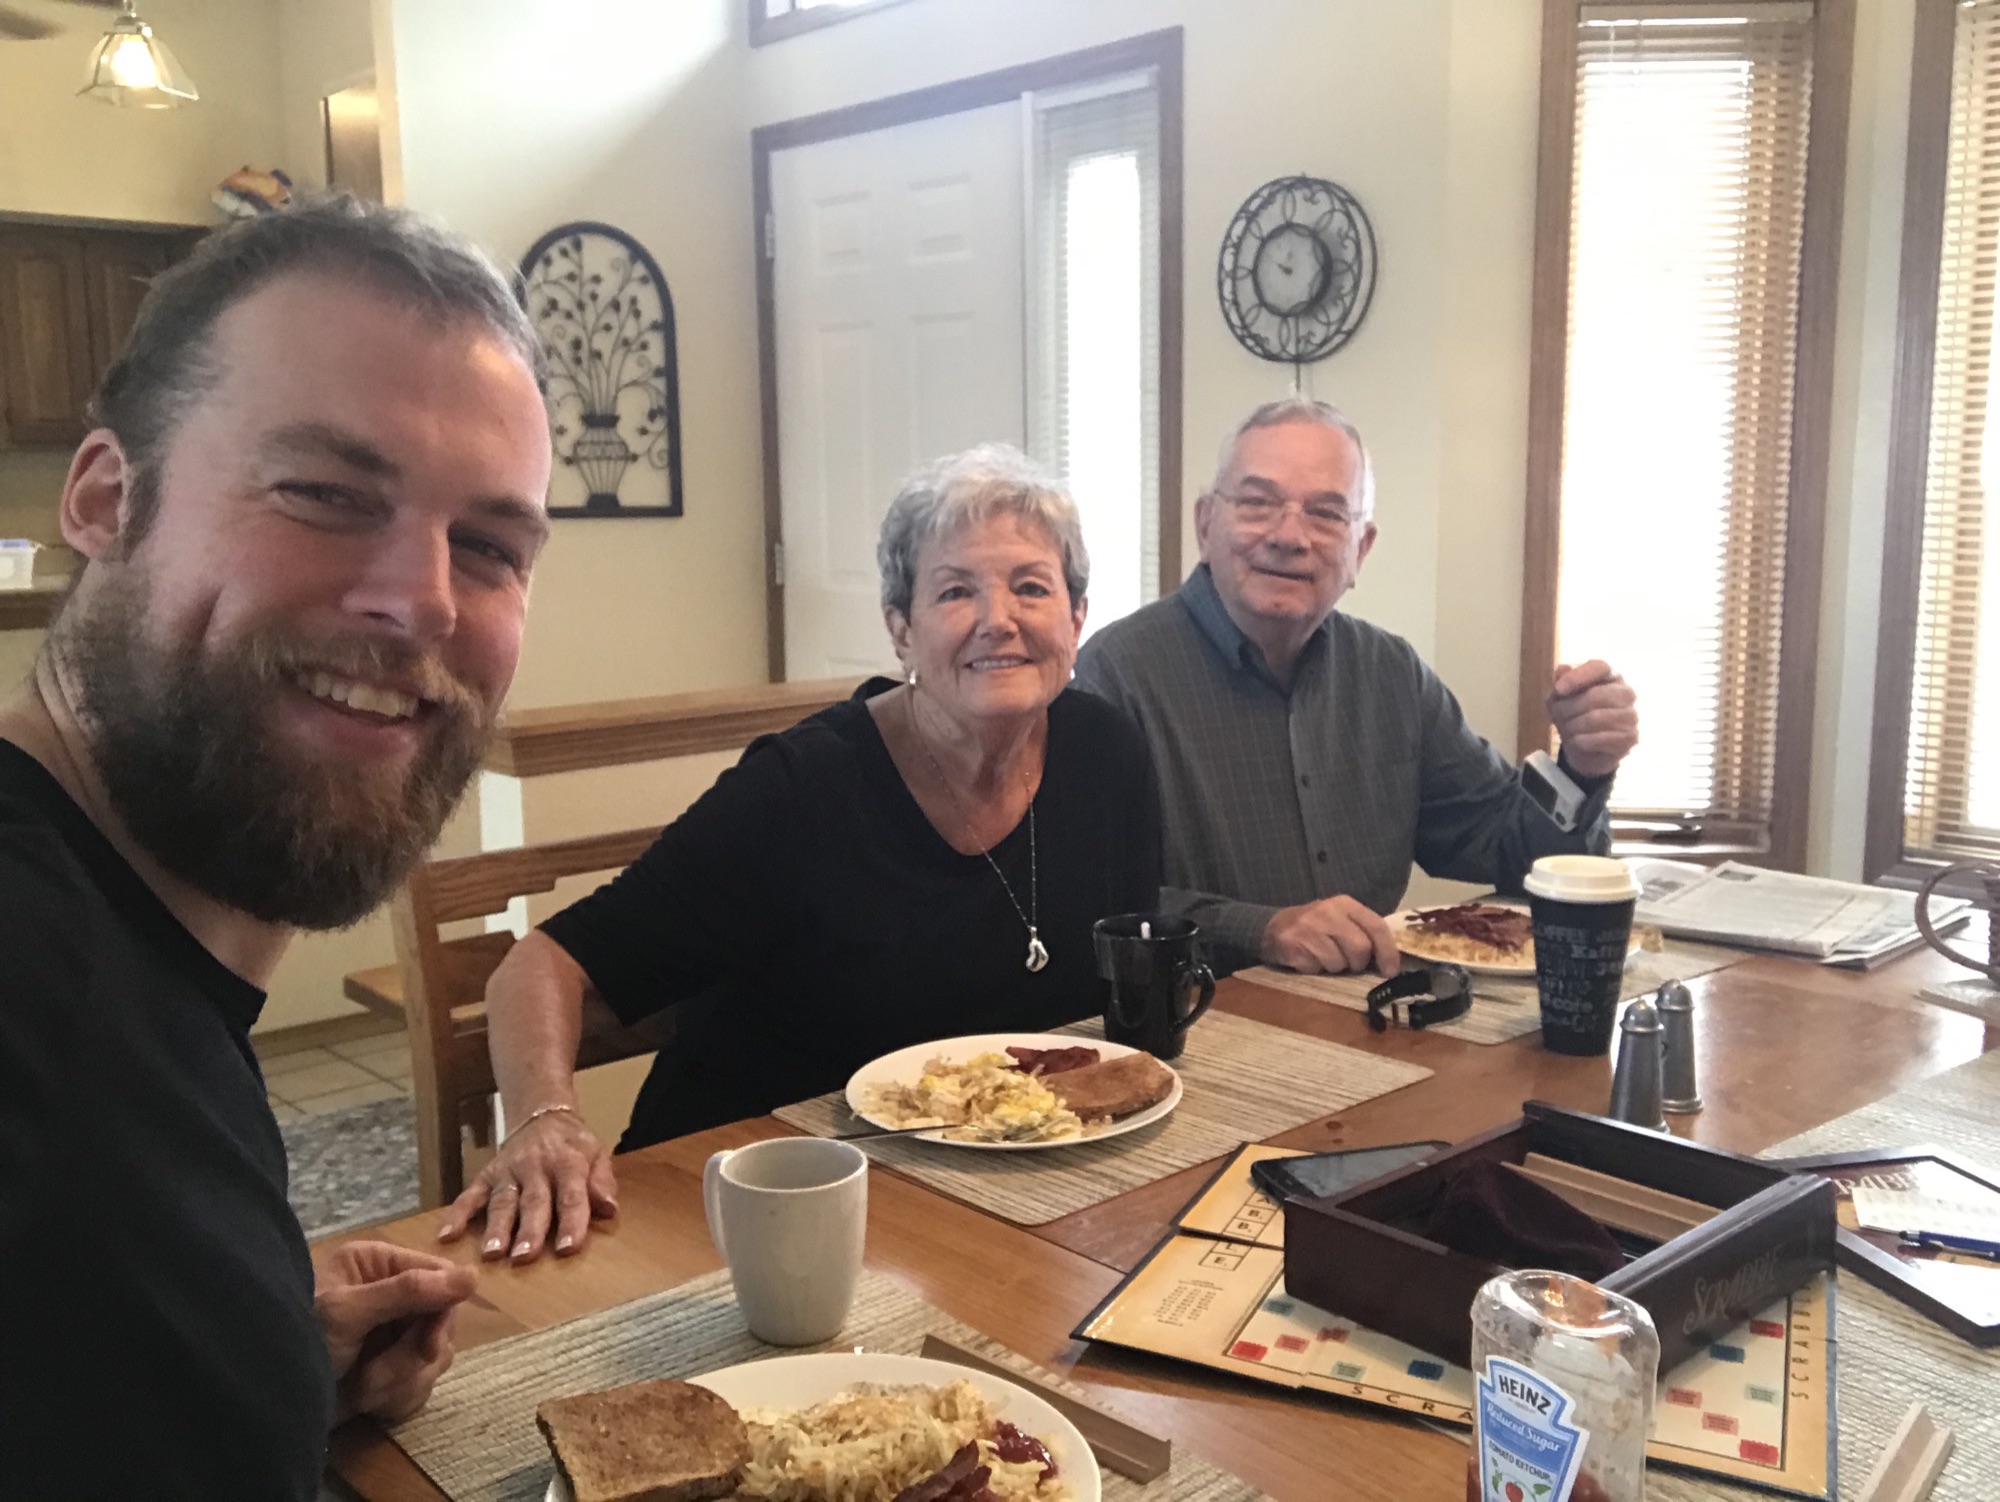 I love having breakfast with my grandparents